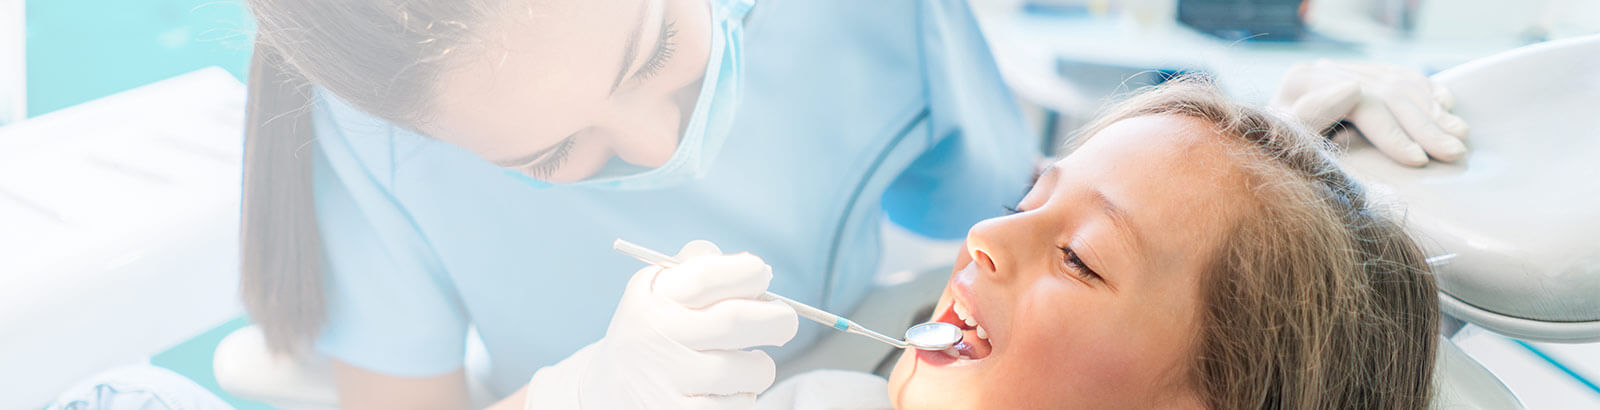 Endodontics Specialist Mailing List